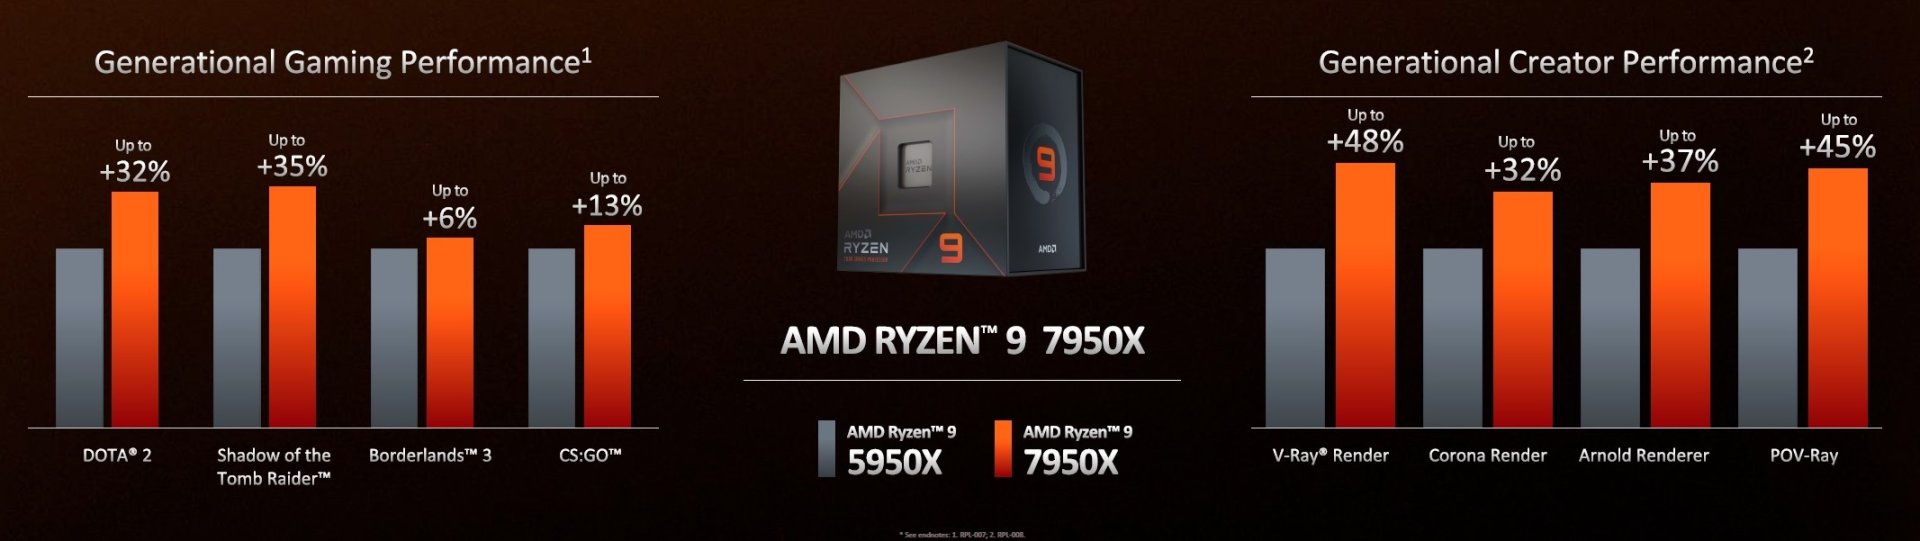 AMD Ryzen 7000 CPU series performance gains